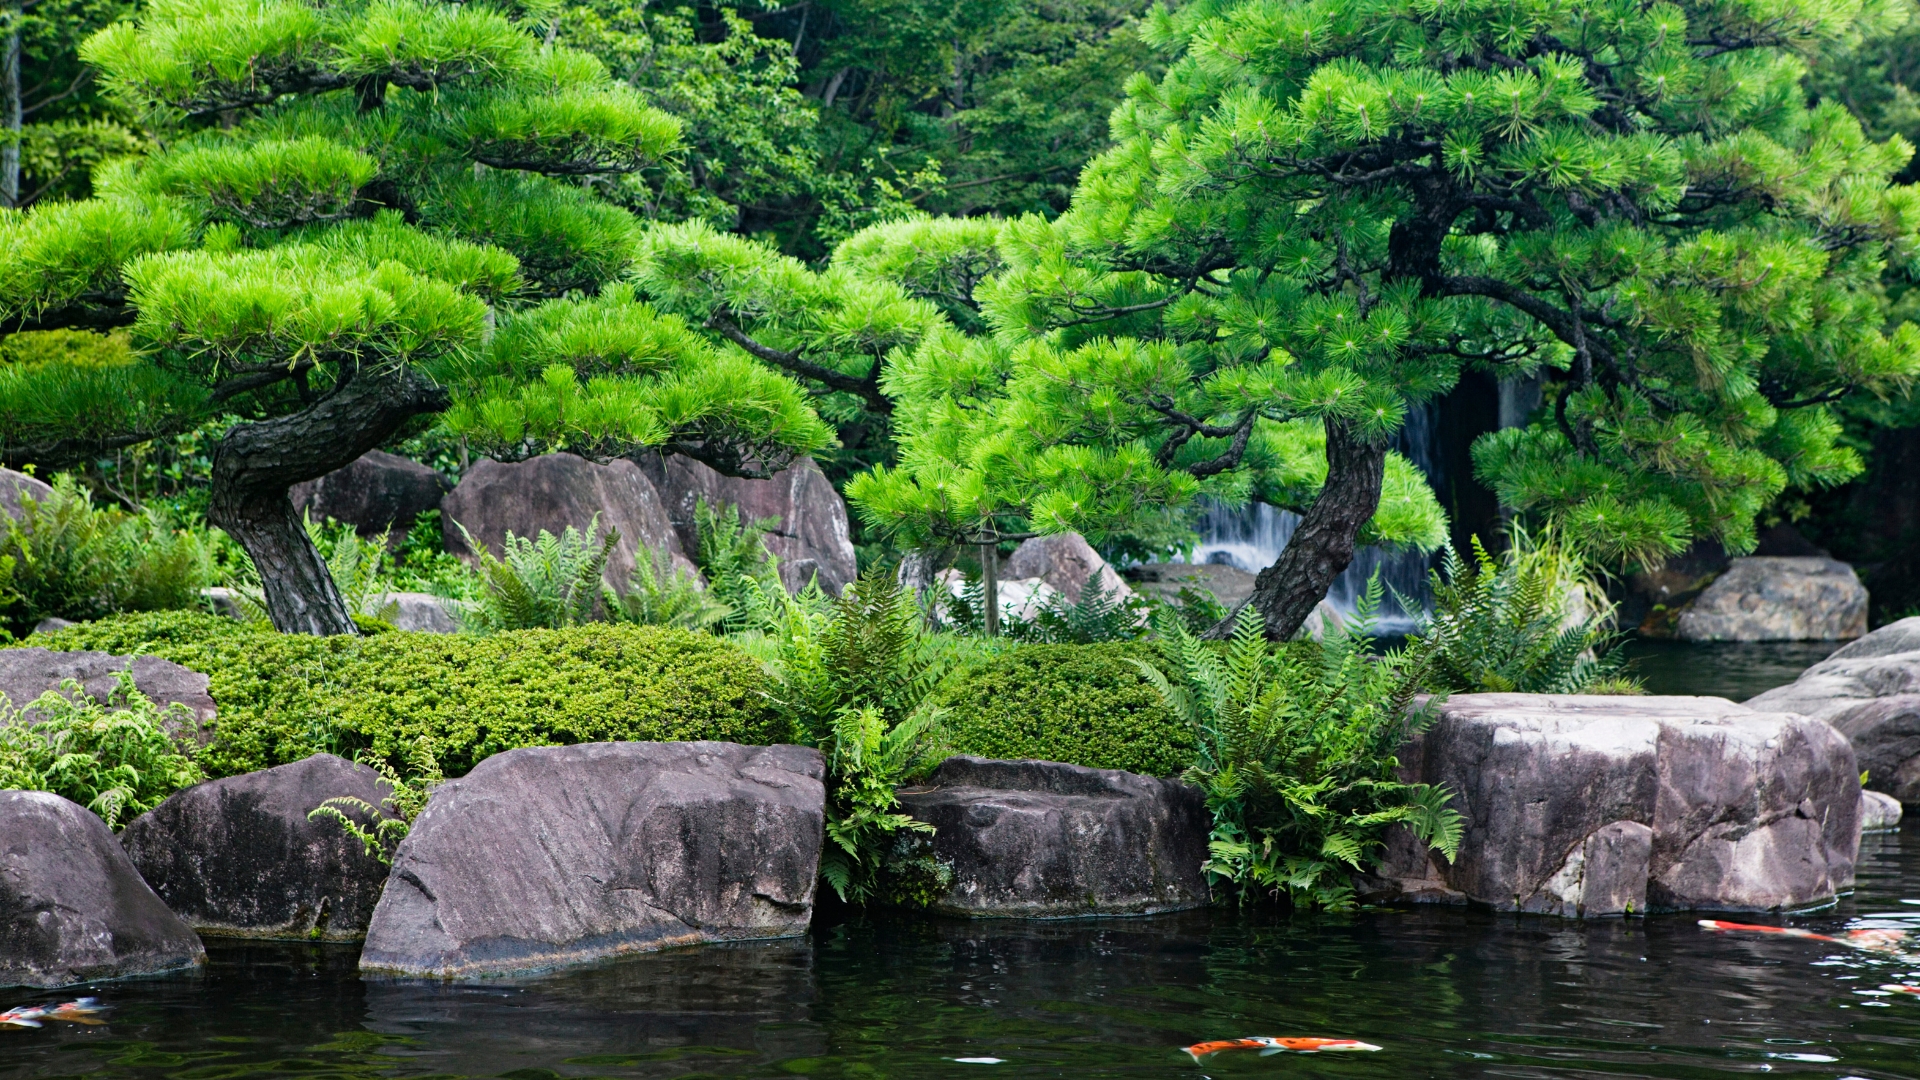 Koko-en Garden in Himeji